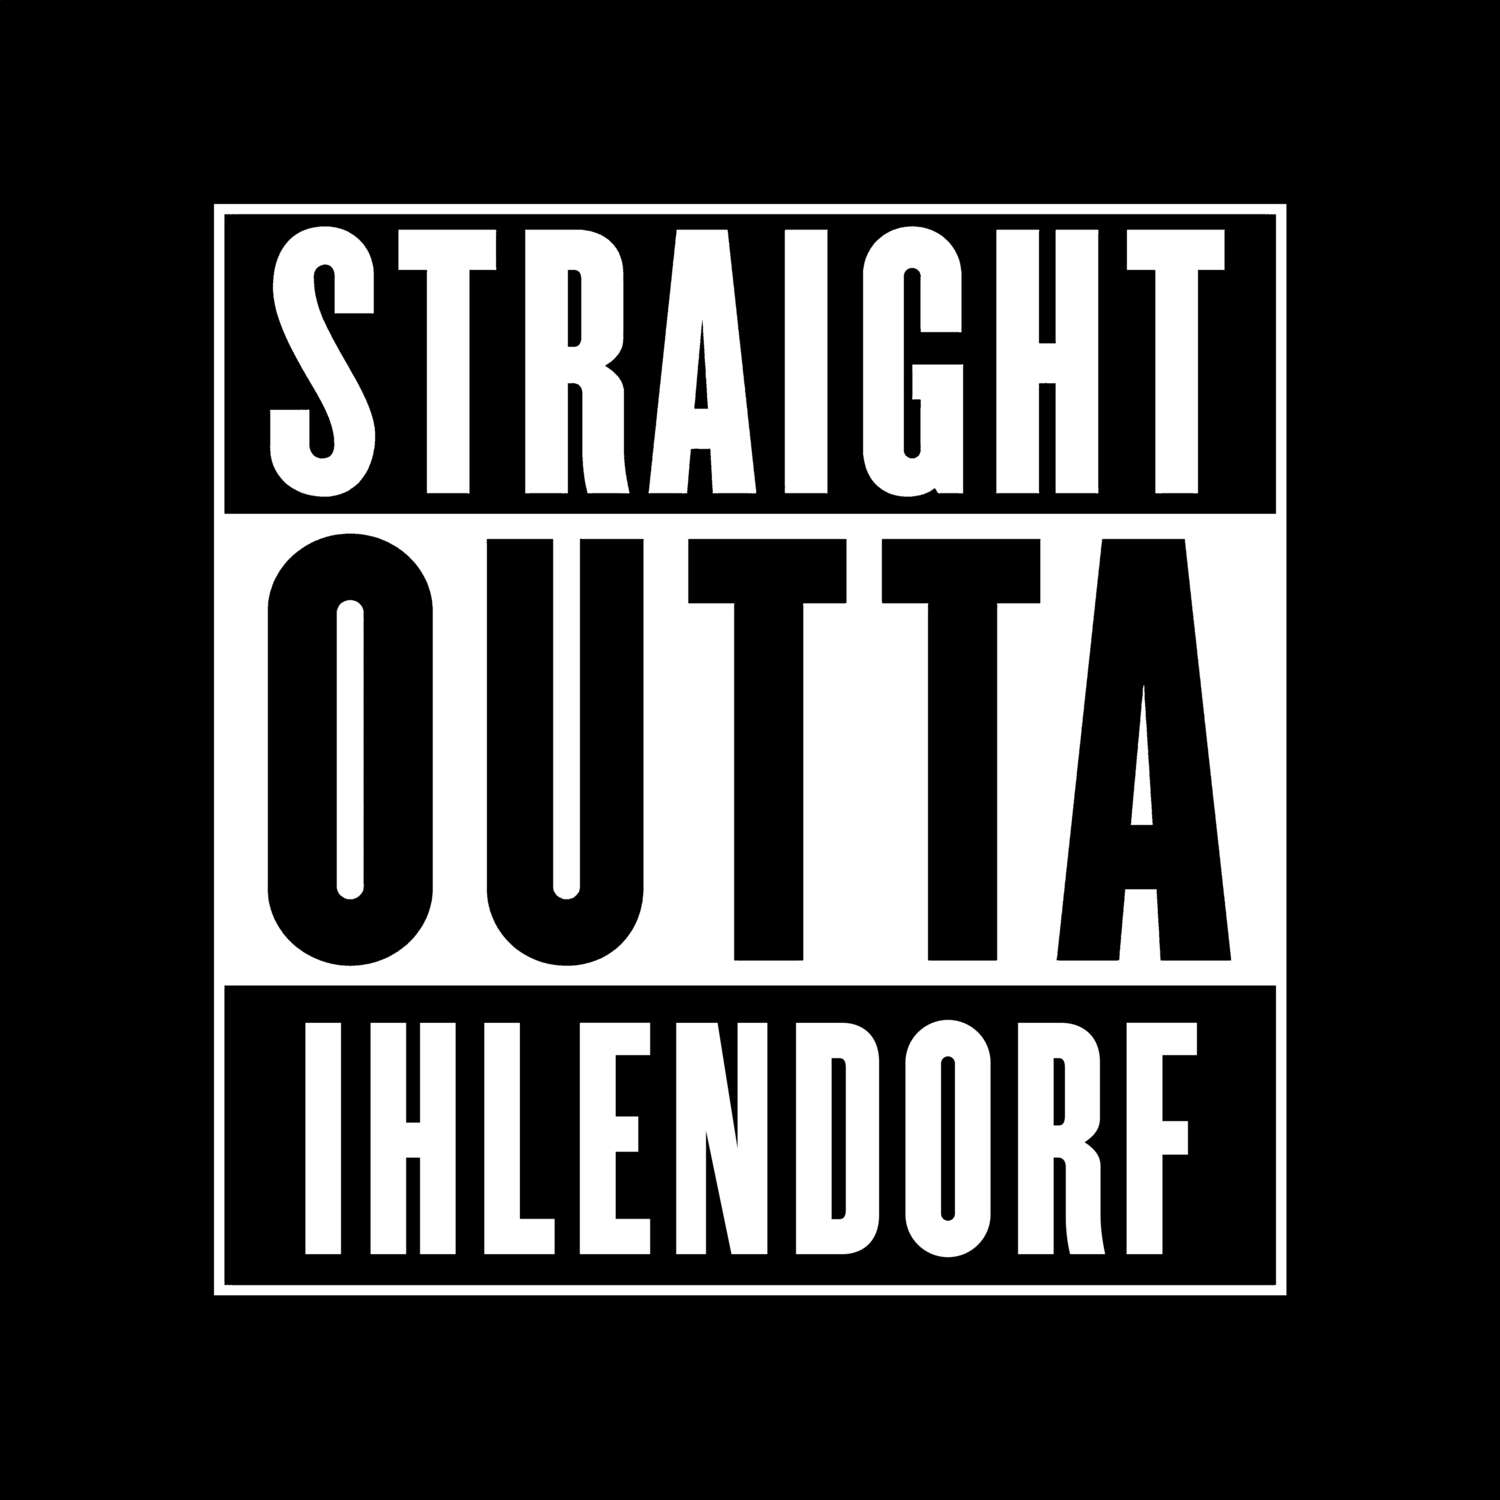 Ihlendorf T-Shirt »Straight Outta«